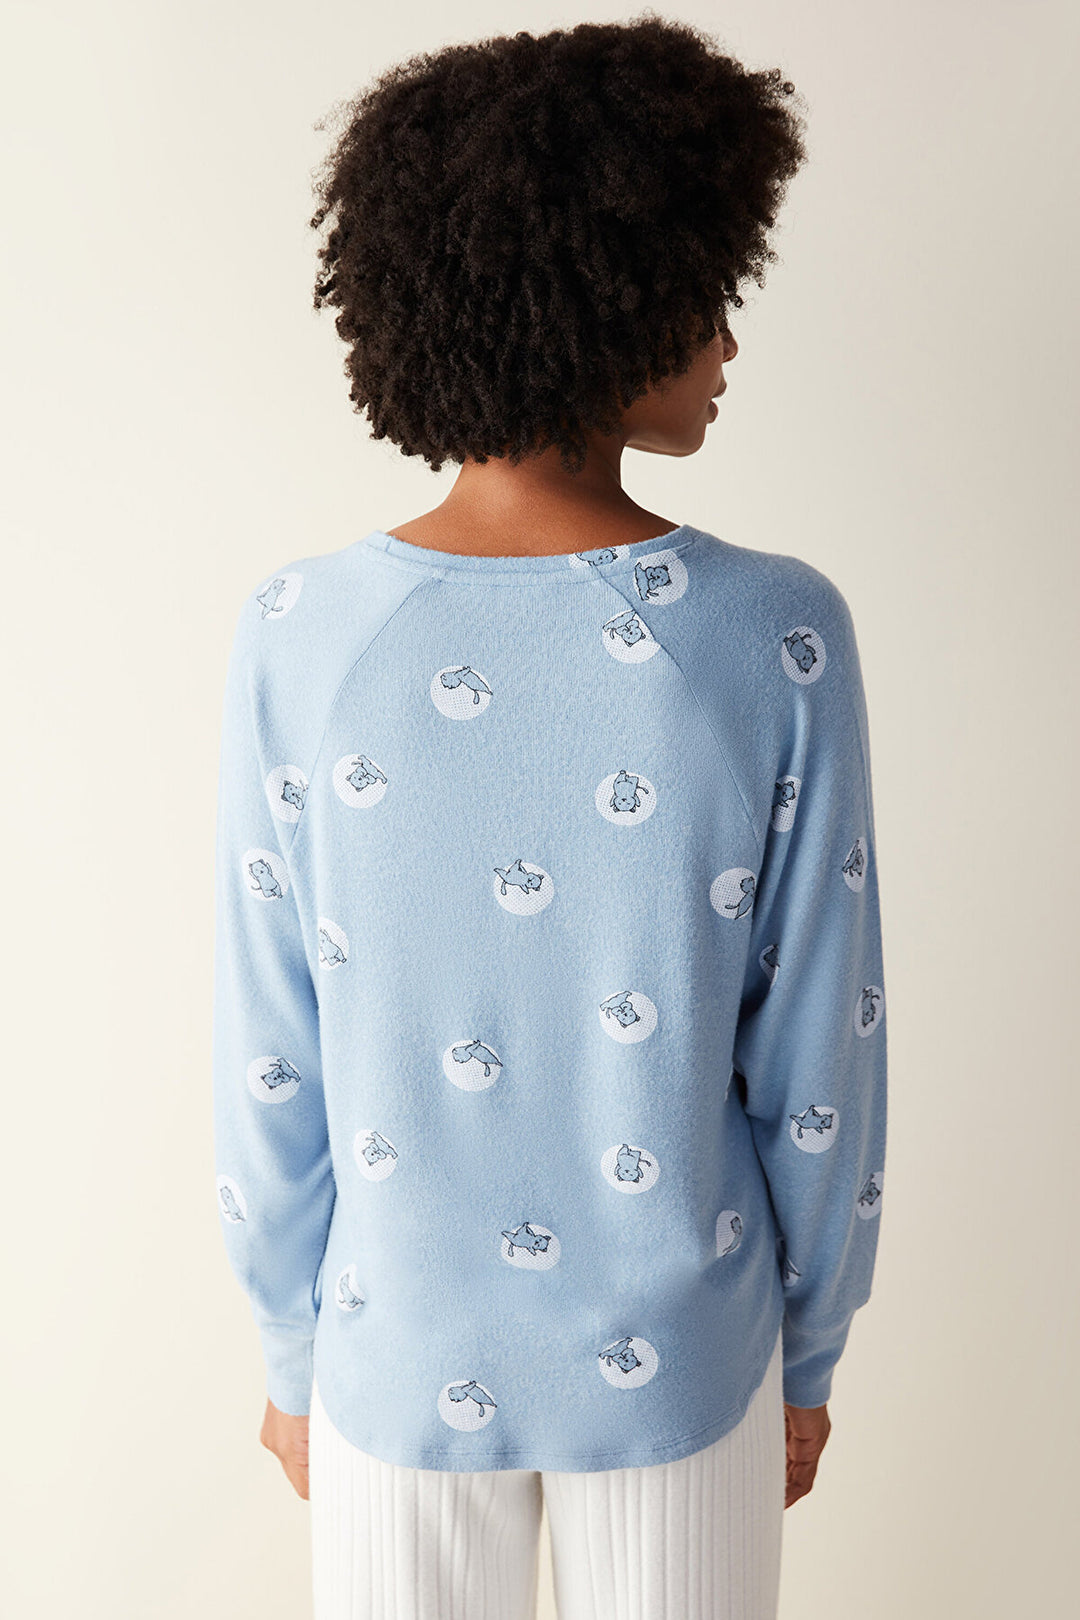 Moon Yoga Printed Sweatshirt Blue Pajama Top